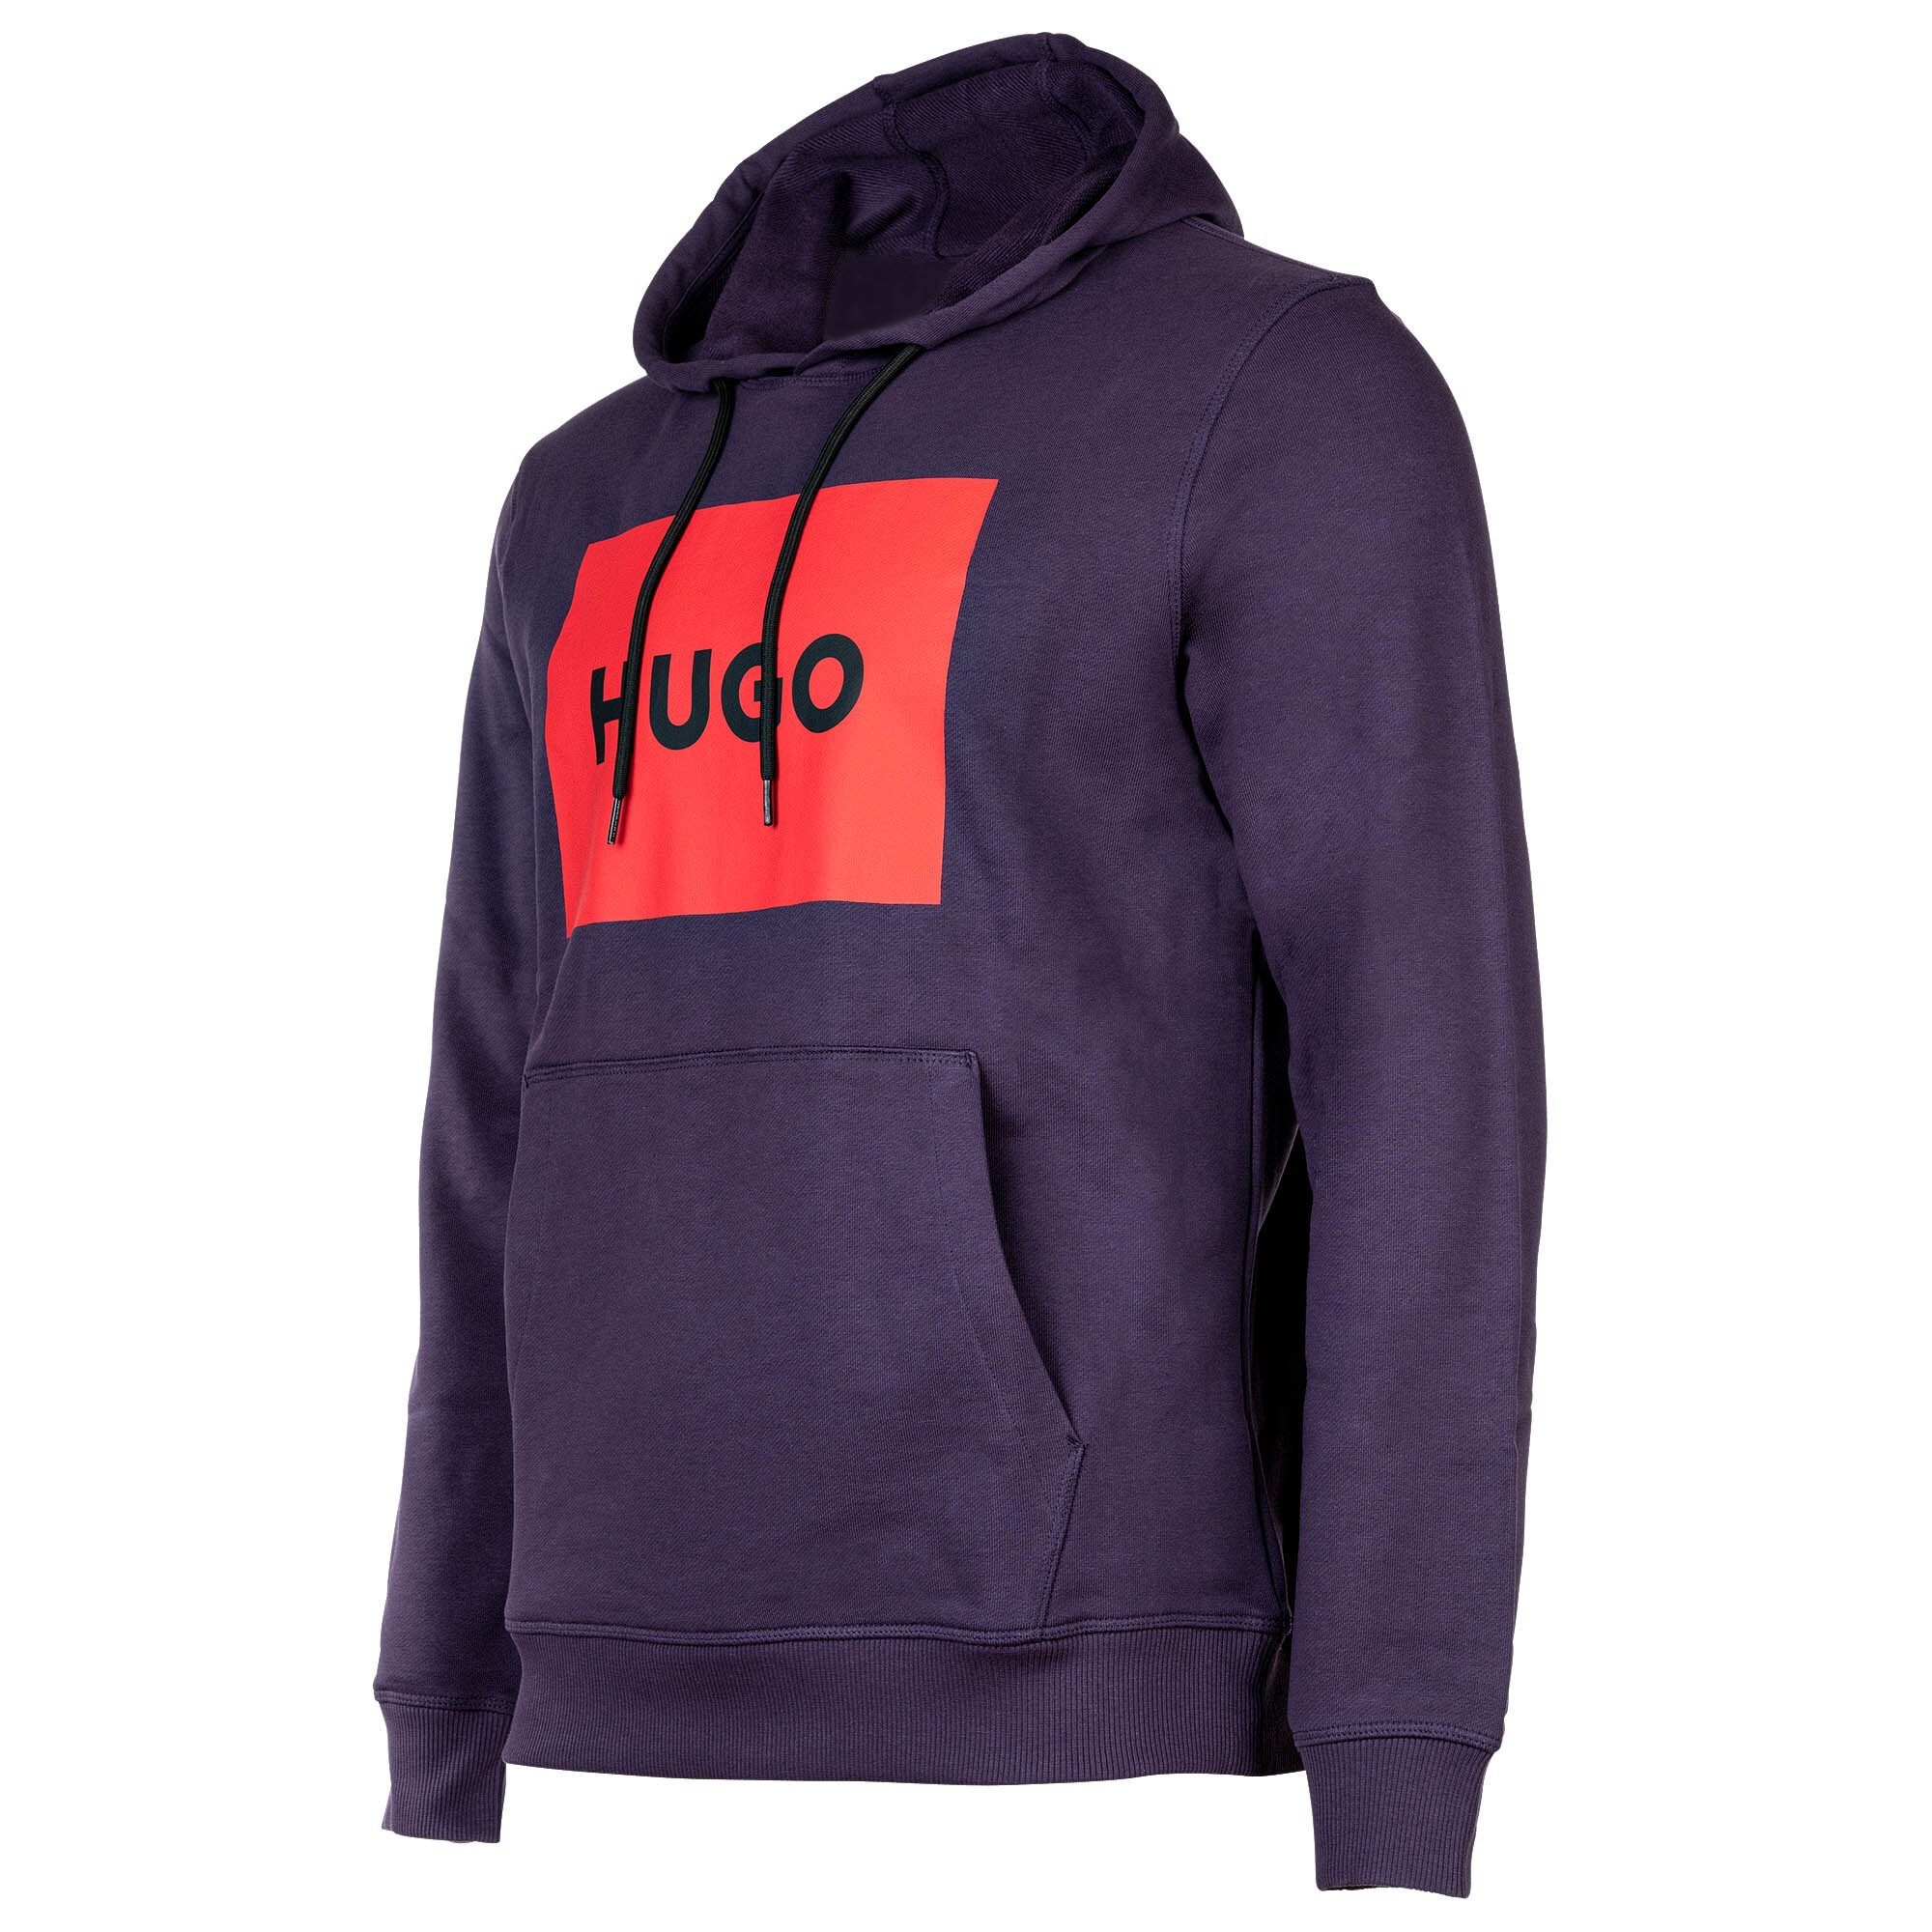 HUGO - Sweatshirt Lila Herren Duratschi223, Hoodie Kapuzen-Sweatshirt